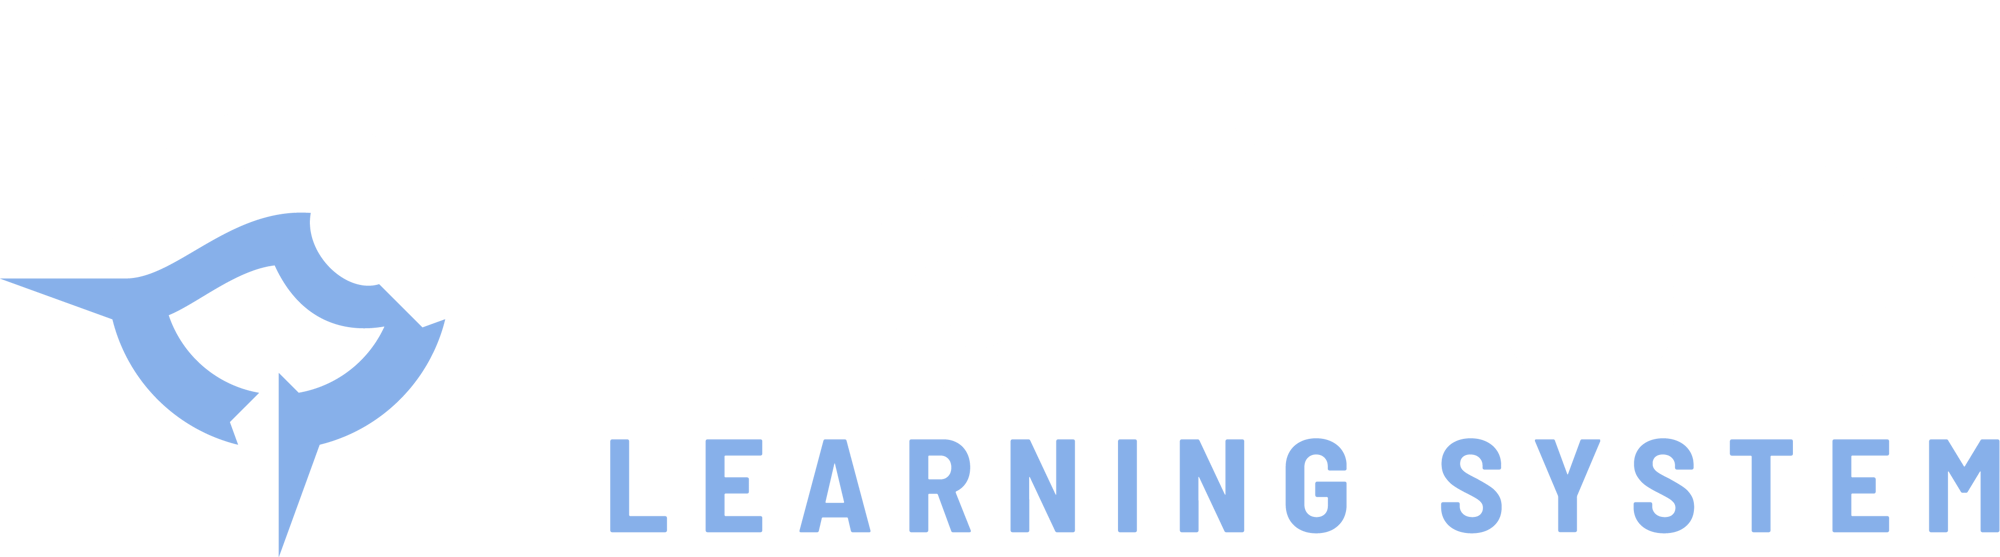 Mariners Learning System Horizontal Logo - Light